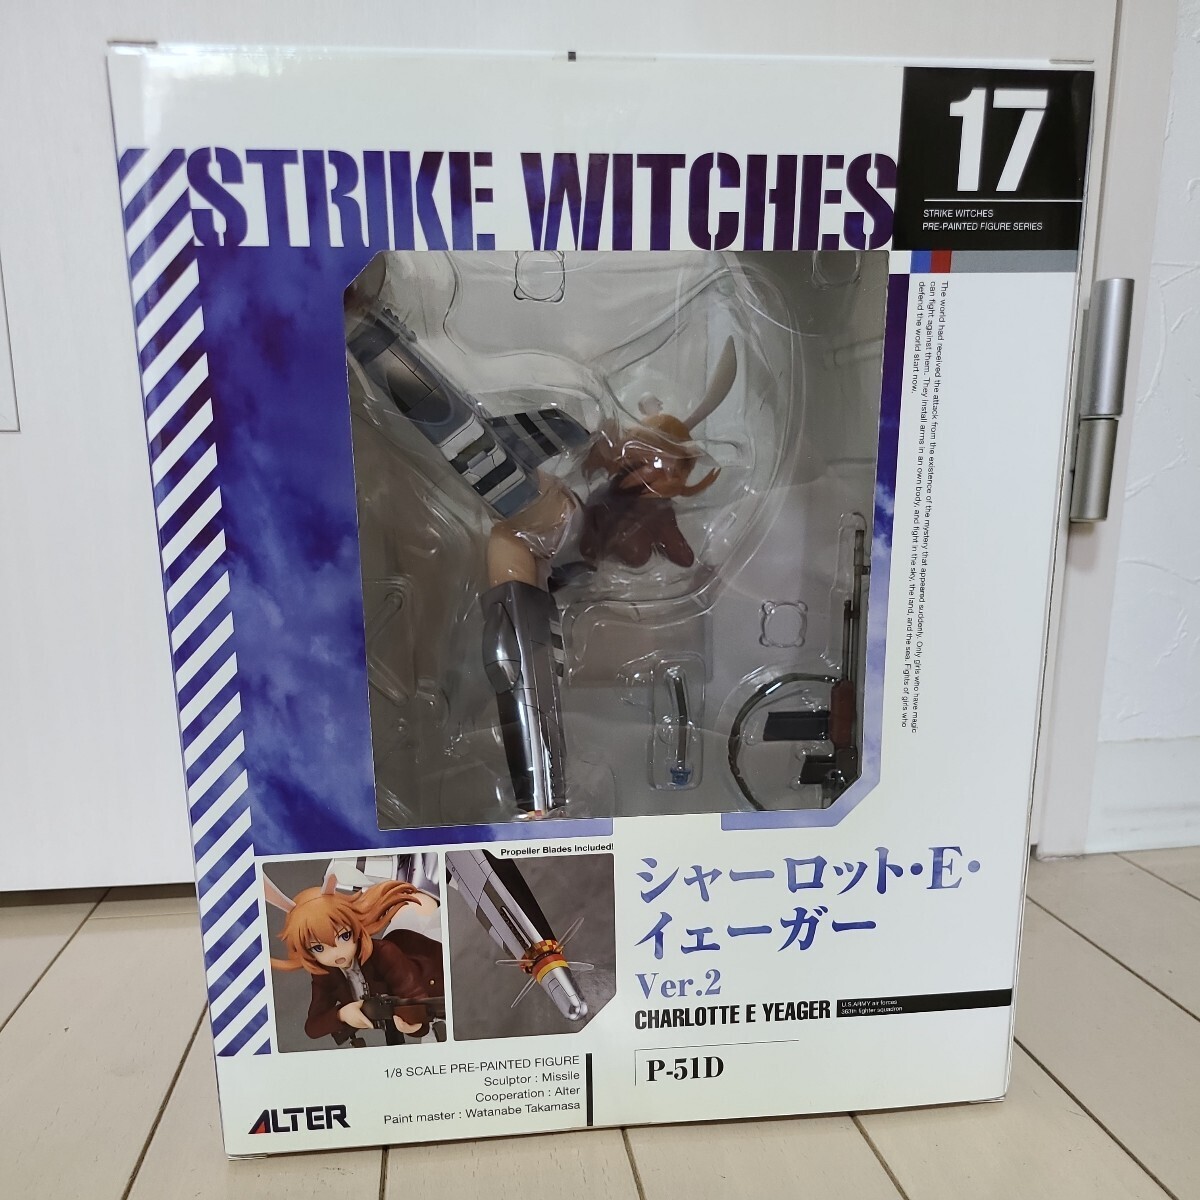  Strike Witches 2 Charlotte *E*i.-ga-Ver.2 (1/8 scale figure ) [aruta-] free shipping rare 